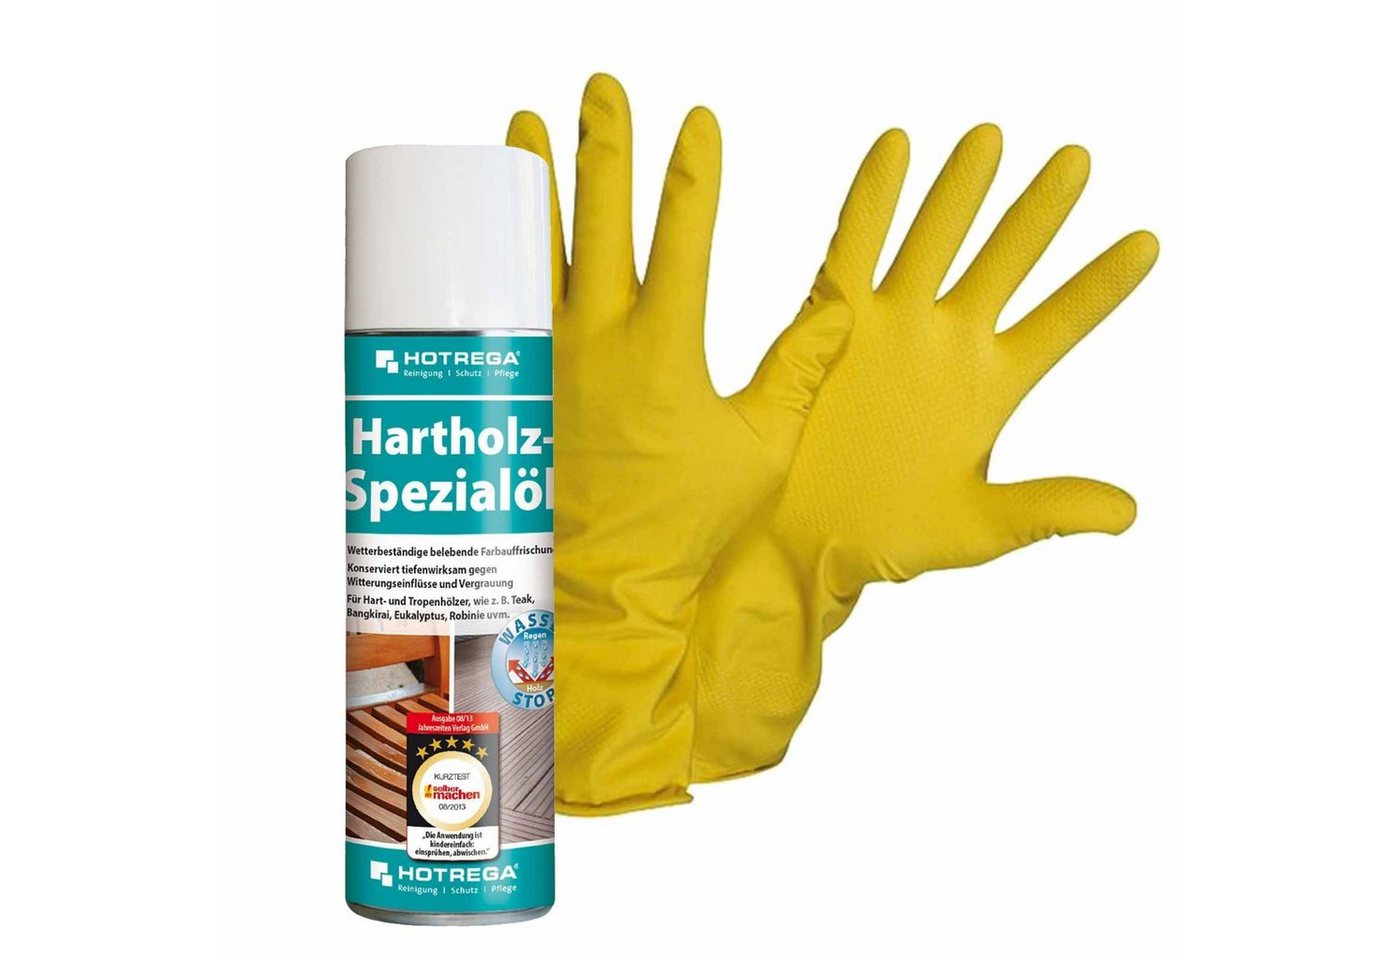 HOTREGA® Hartholz Spezialöl 300 ml SET + NITRAS Handschuhe Gr. 10 Pflegeset von HOTREGA®